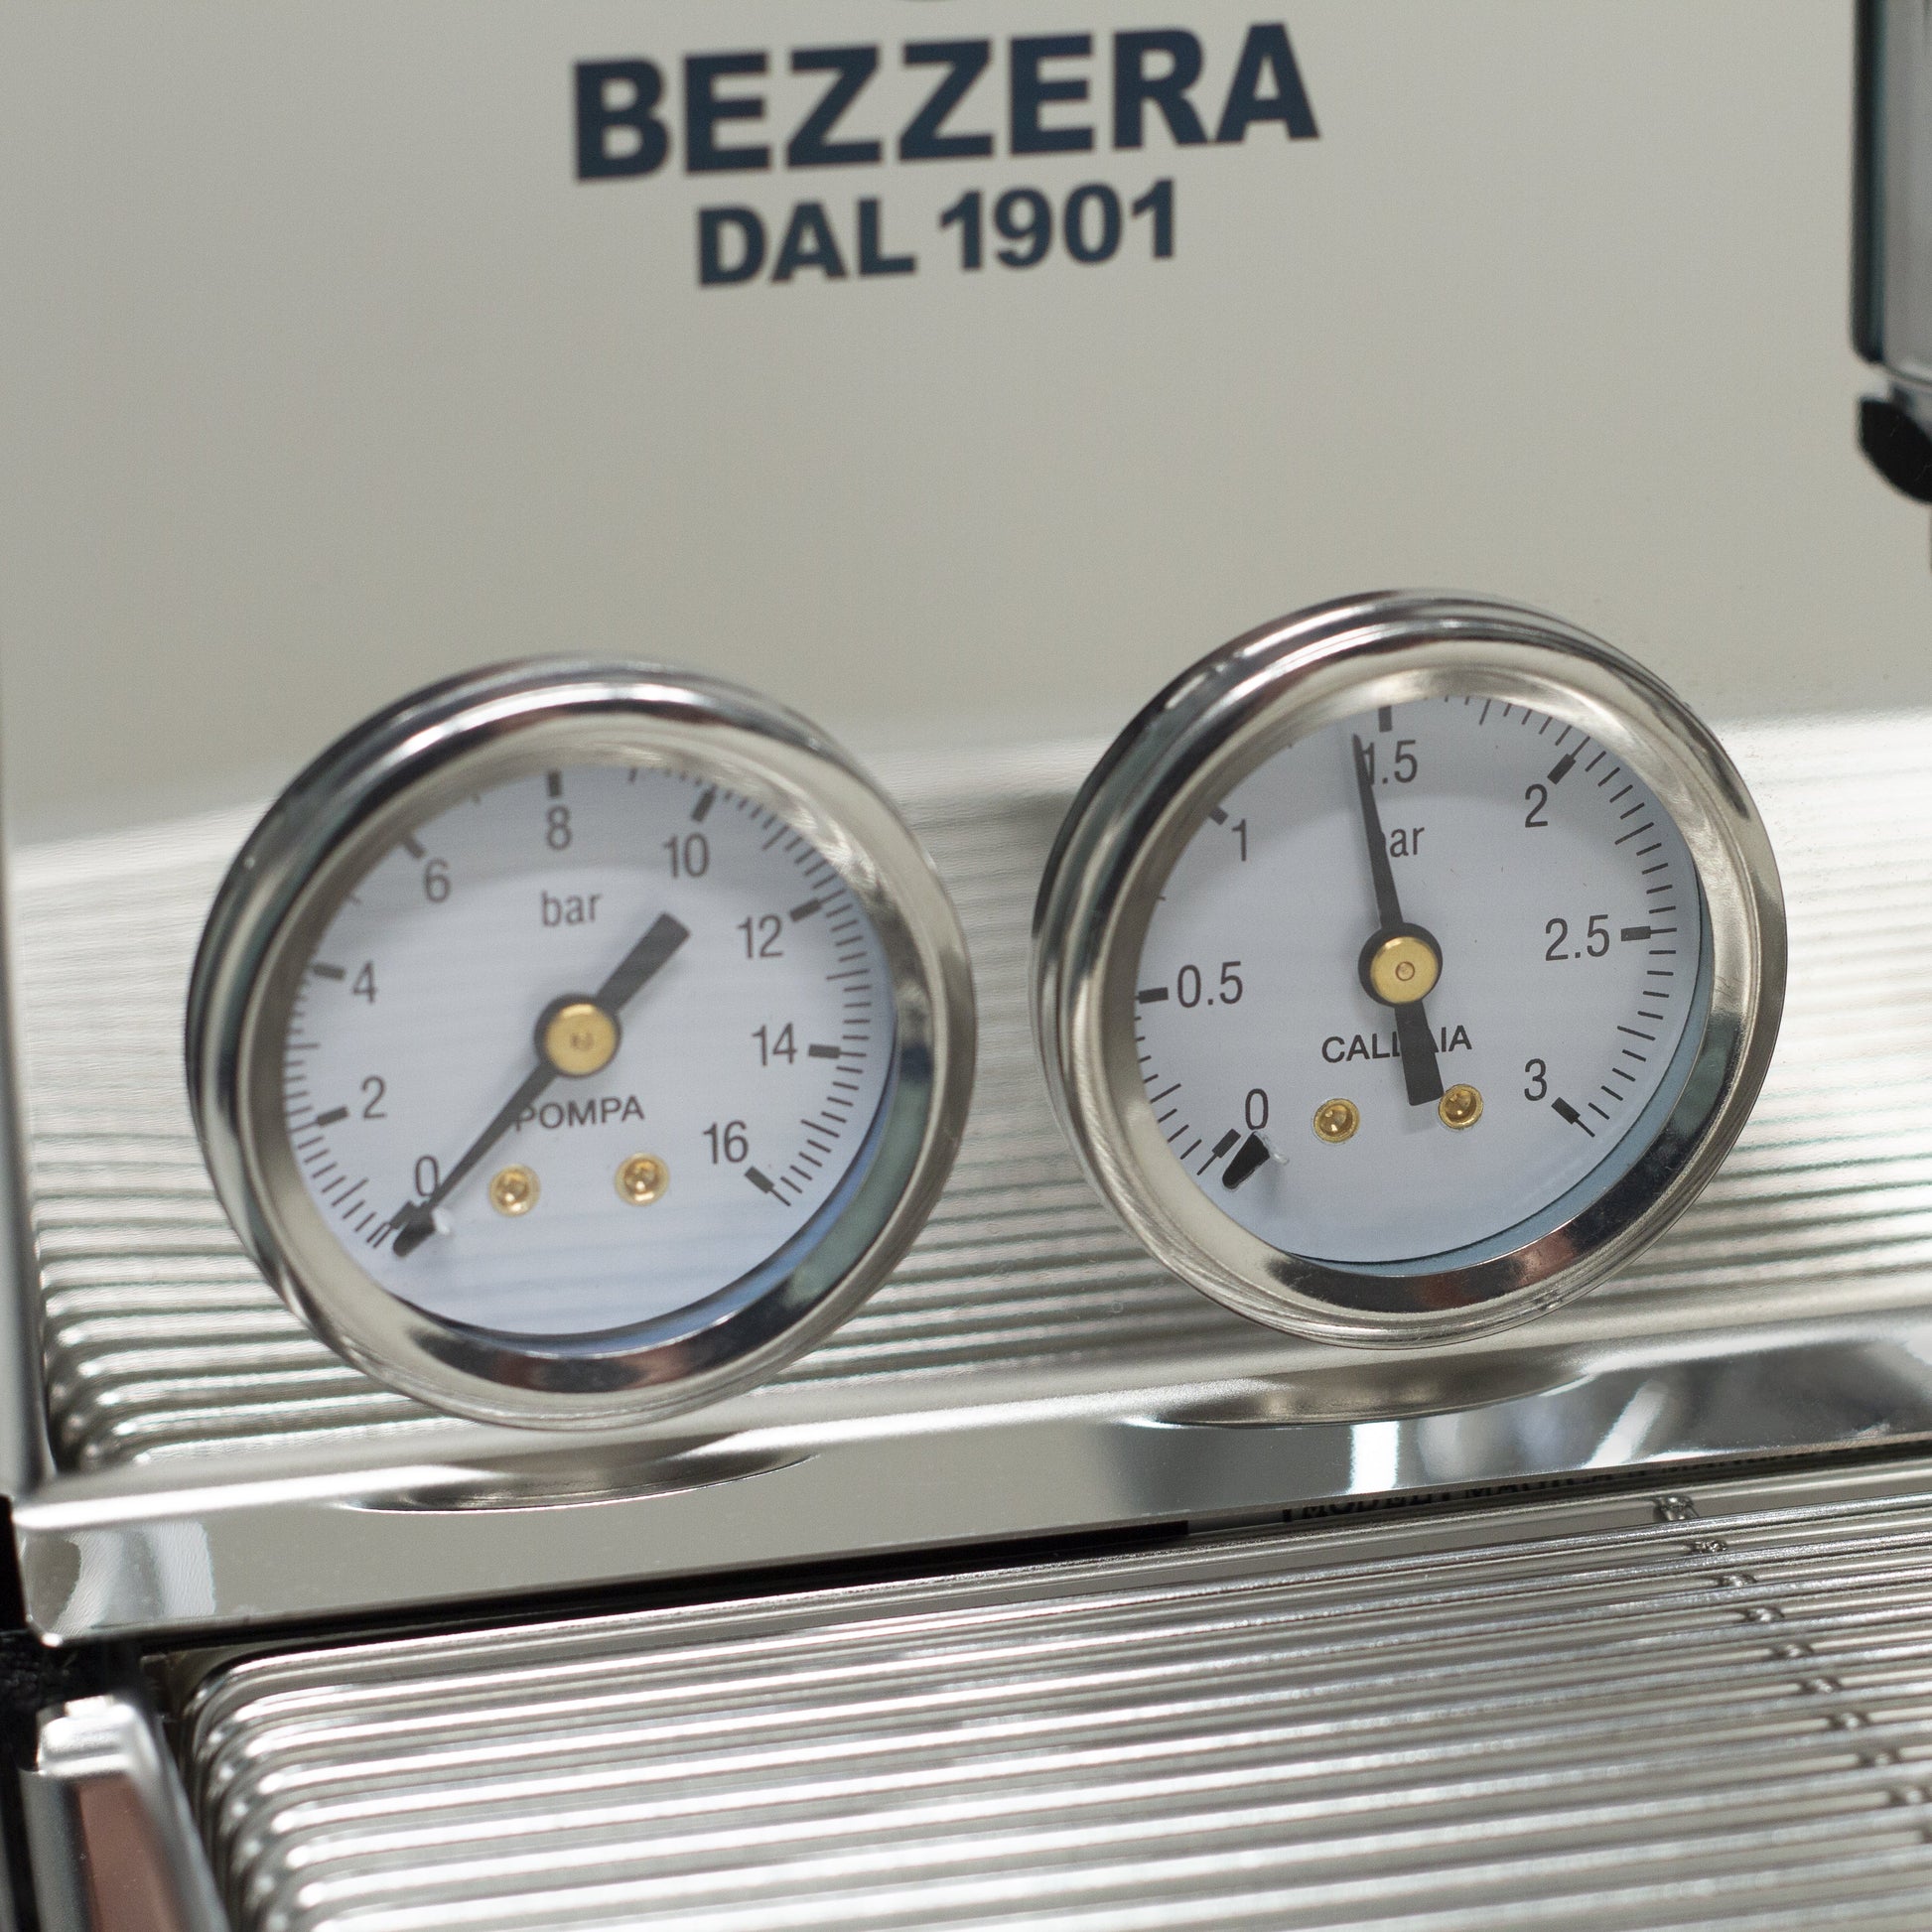 Dual brew and steam pressure gauges.